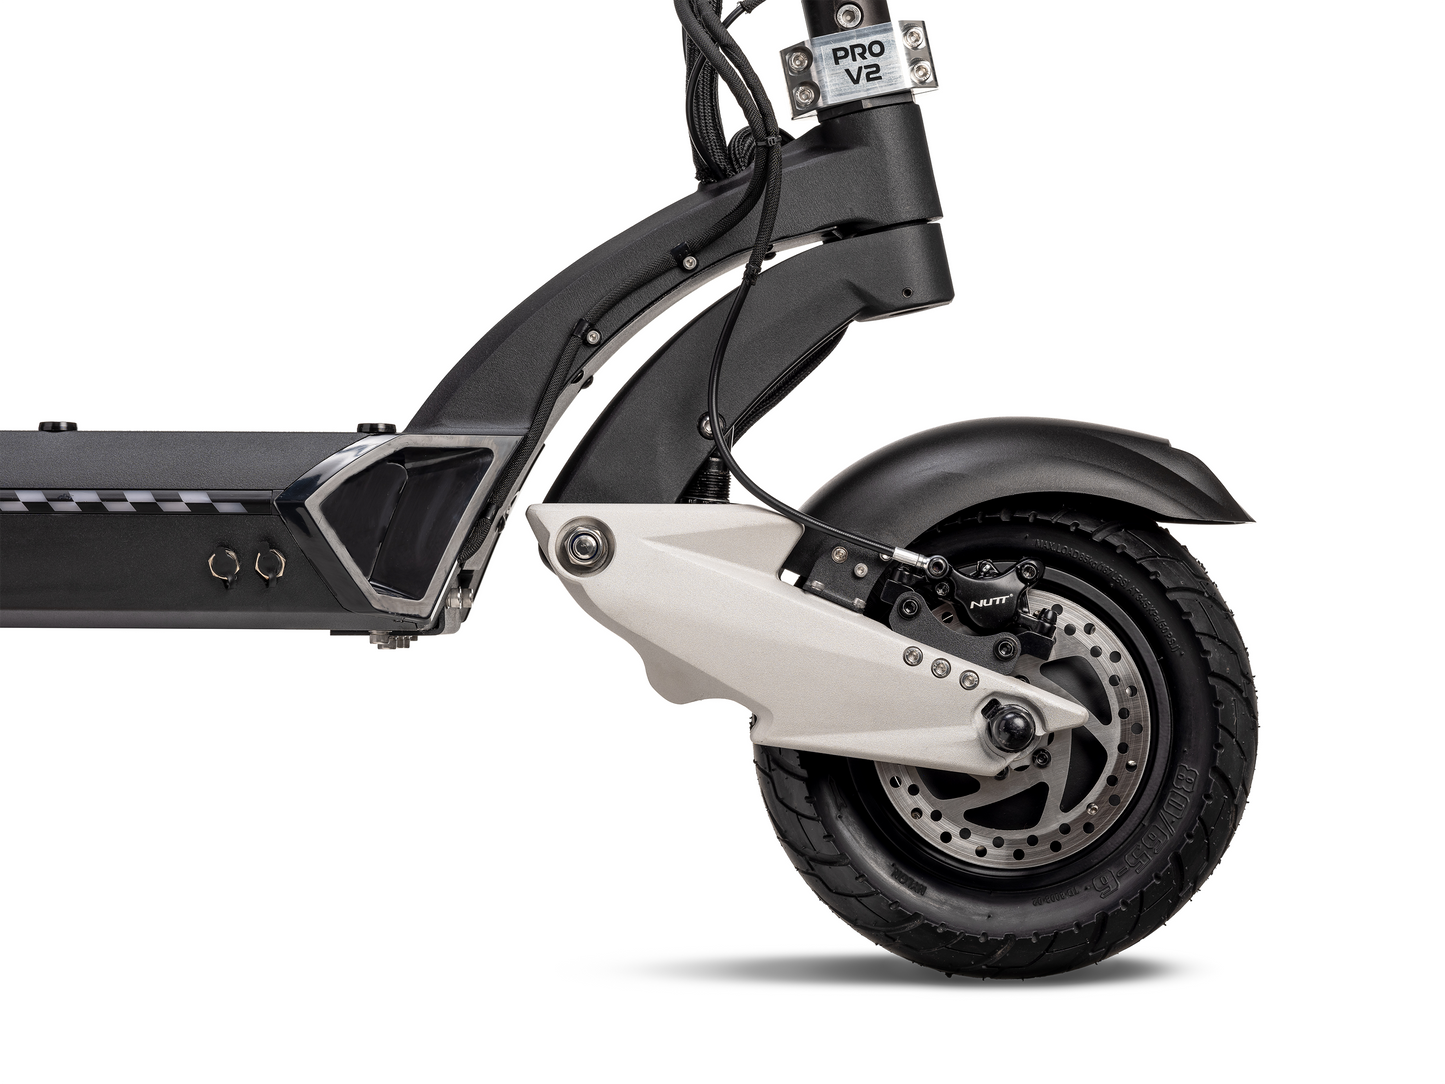 Evolv PRO V2 Electric Scooter